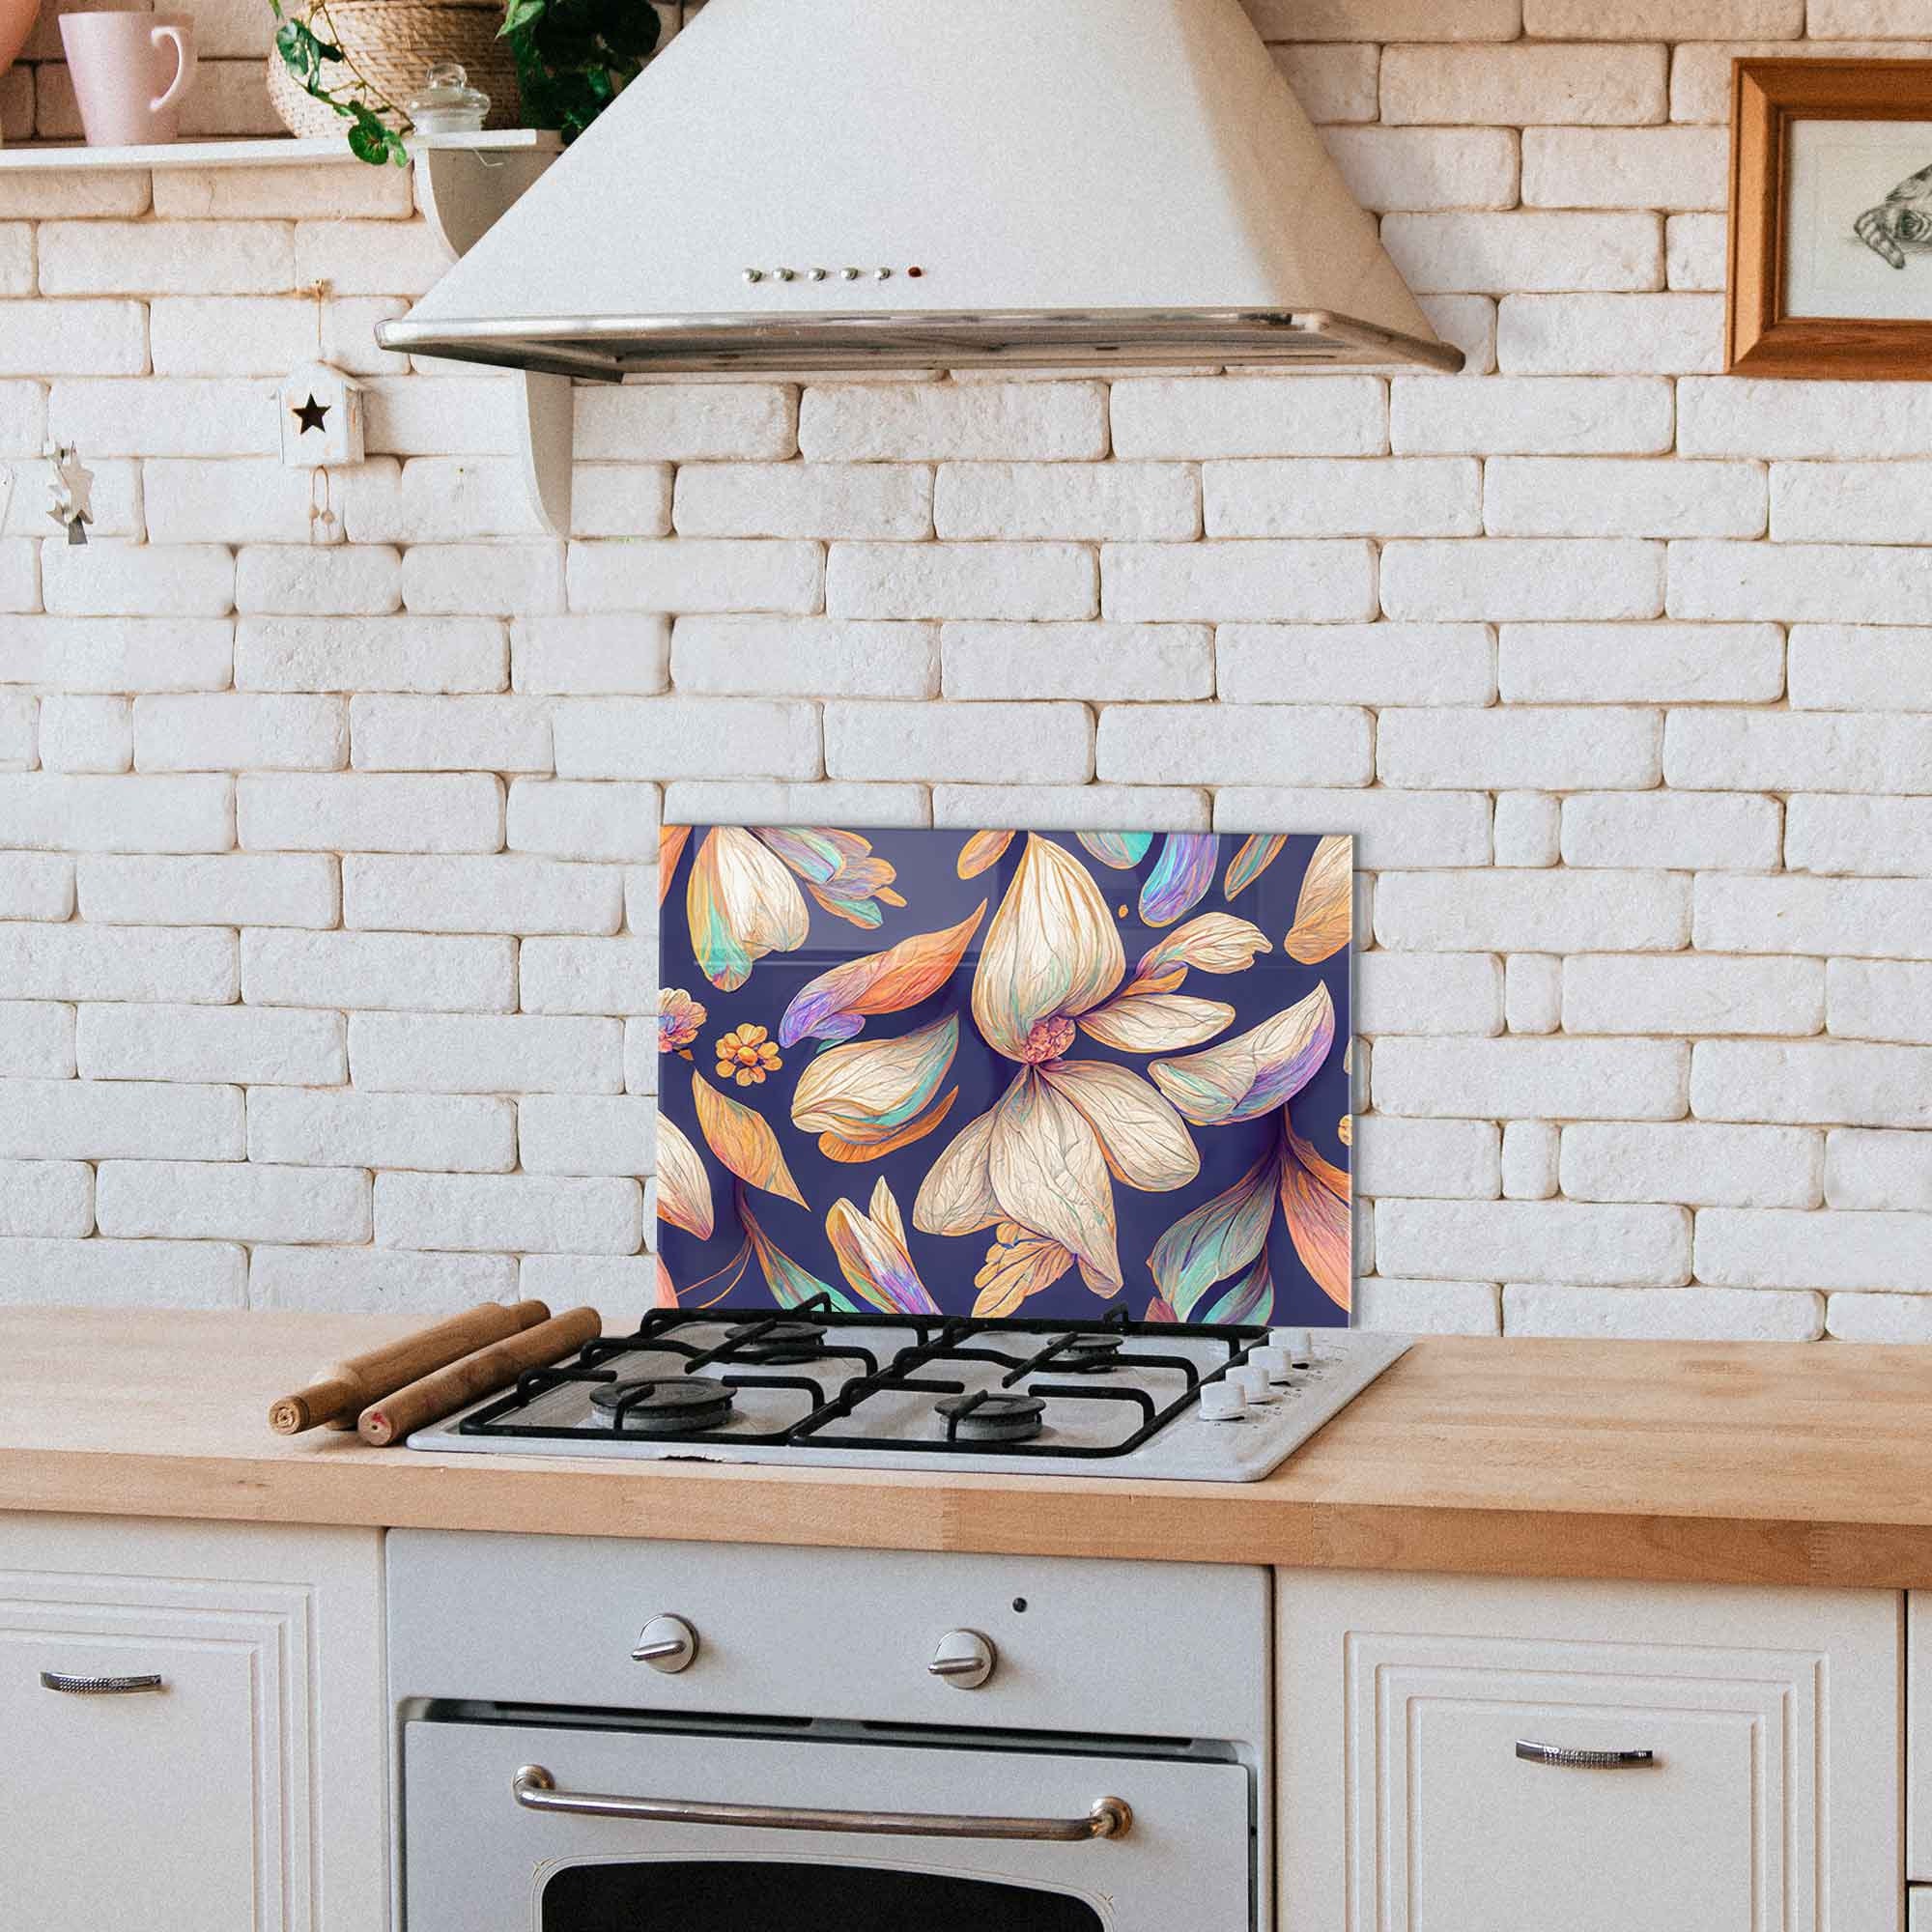 Compra KitchenYeah© Antisalpicaduras Cocina 90x60 cm Protector